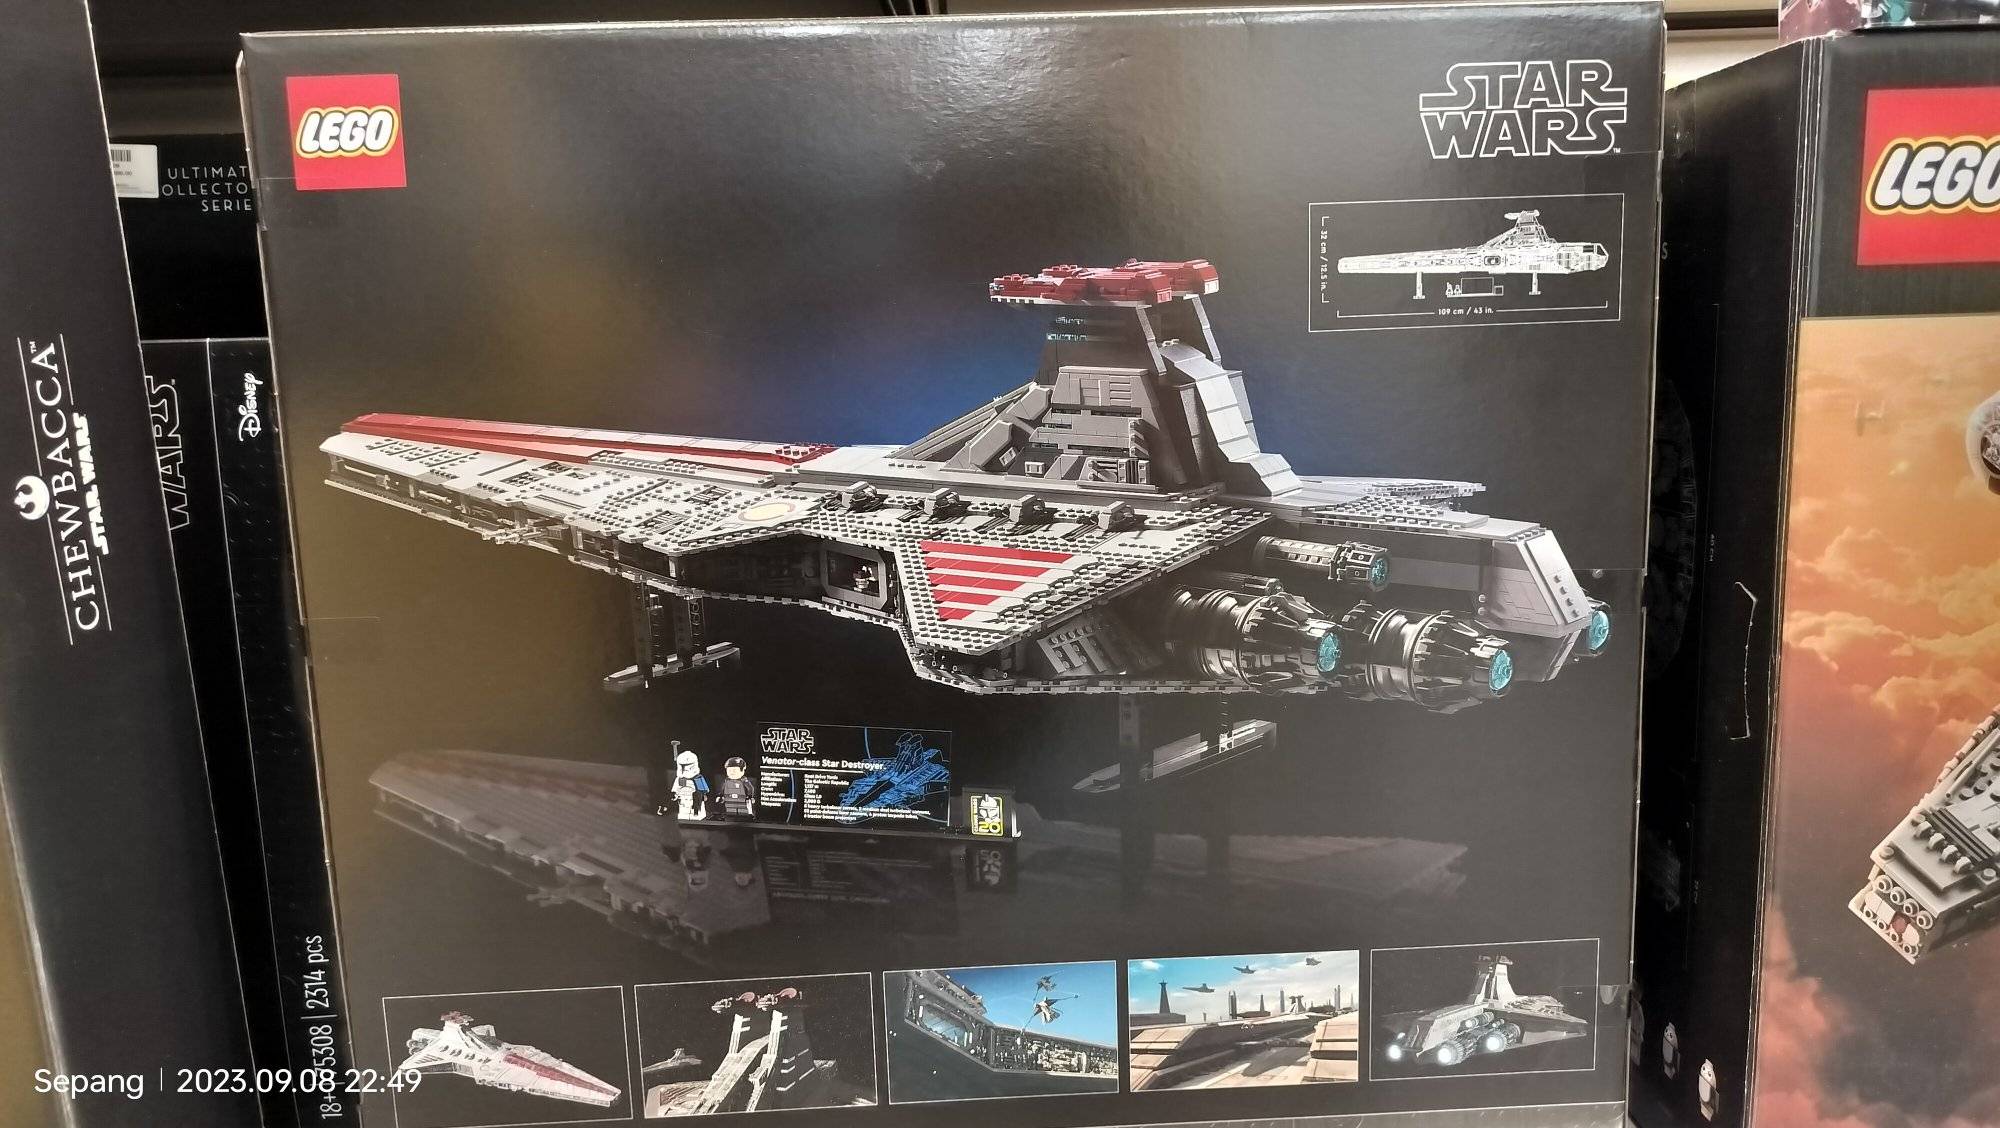 LEGO Star Wars UCS Venator-Class Republic Attack Cruiser (75367